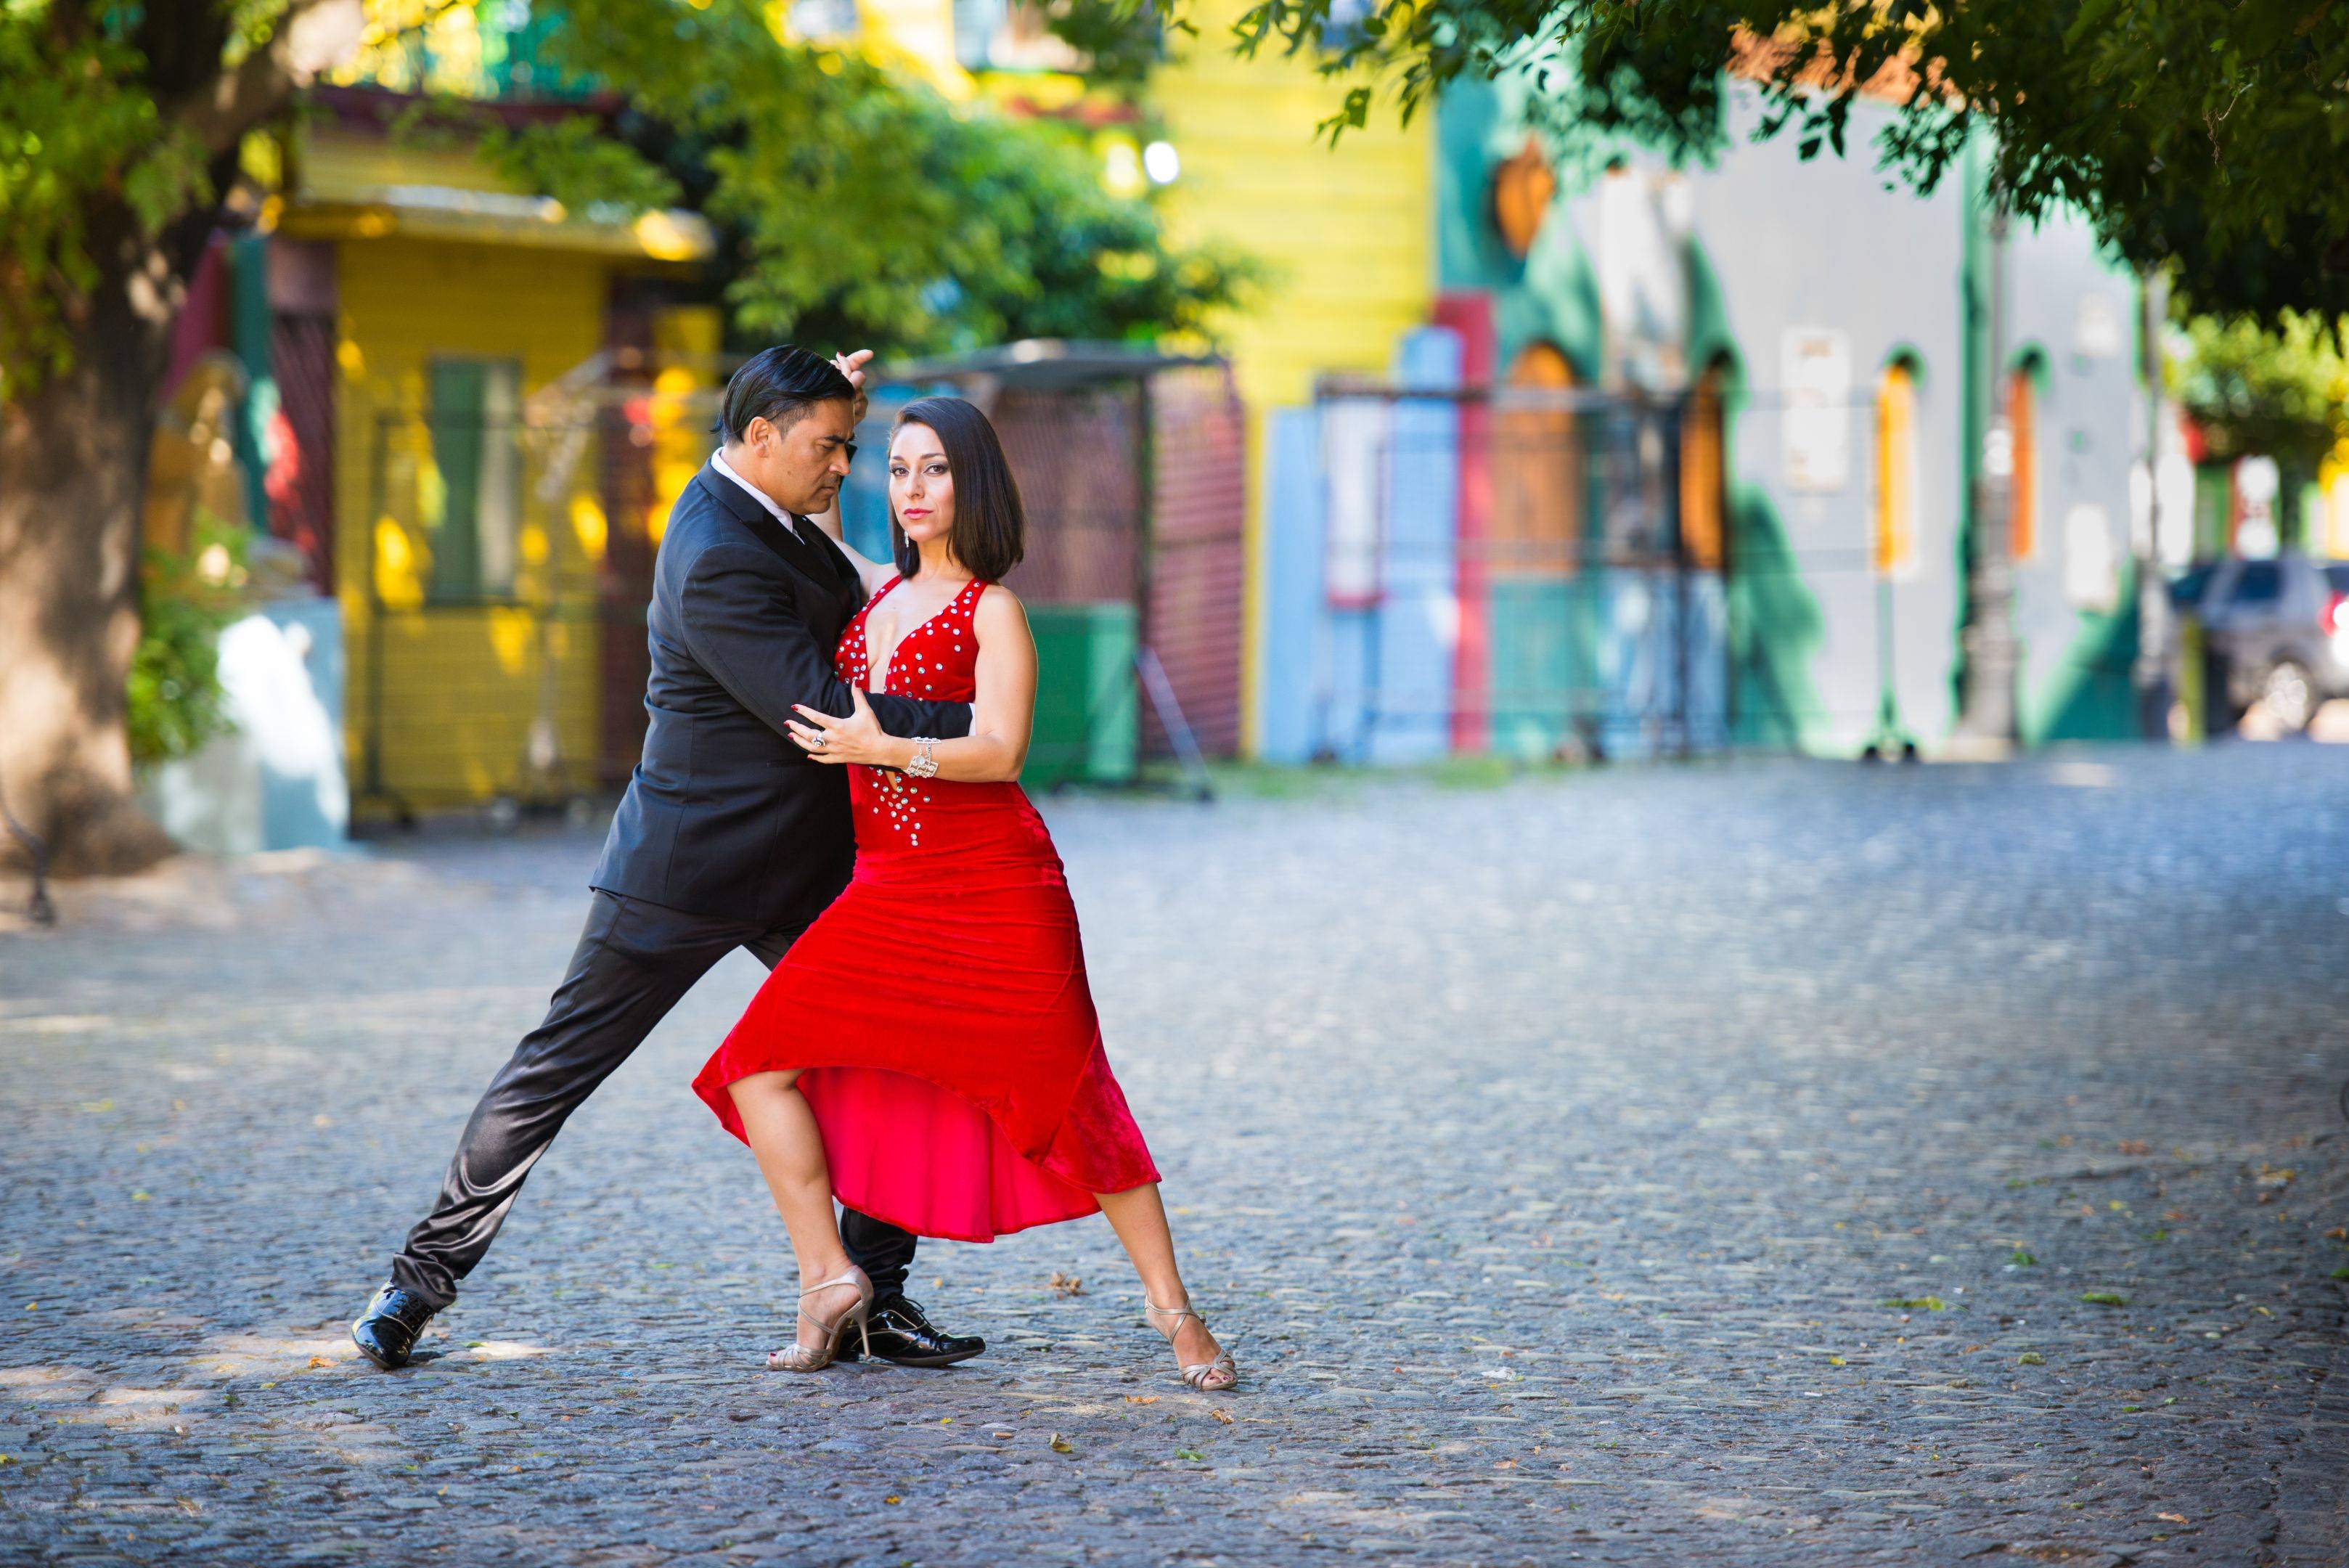 Esperienza del fileteado porteño e tango argentino